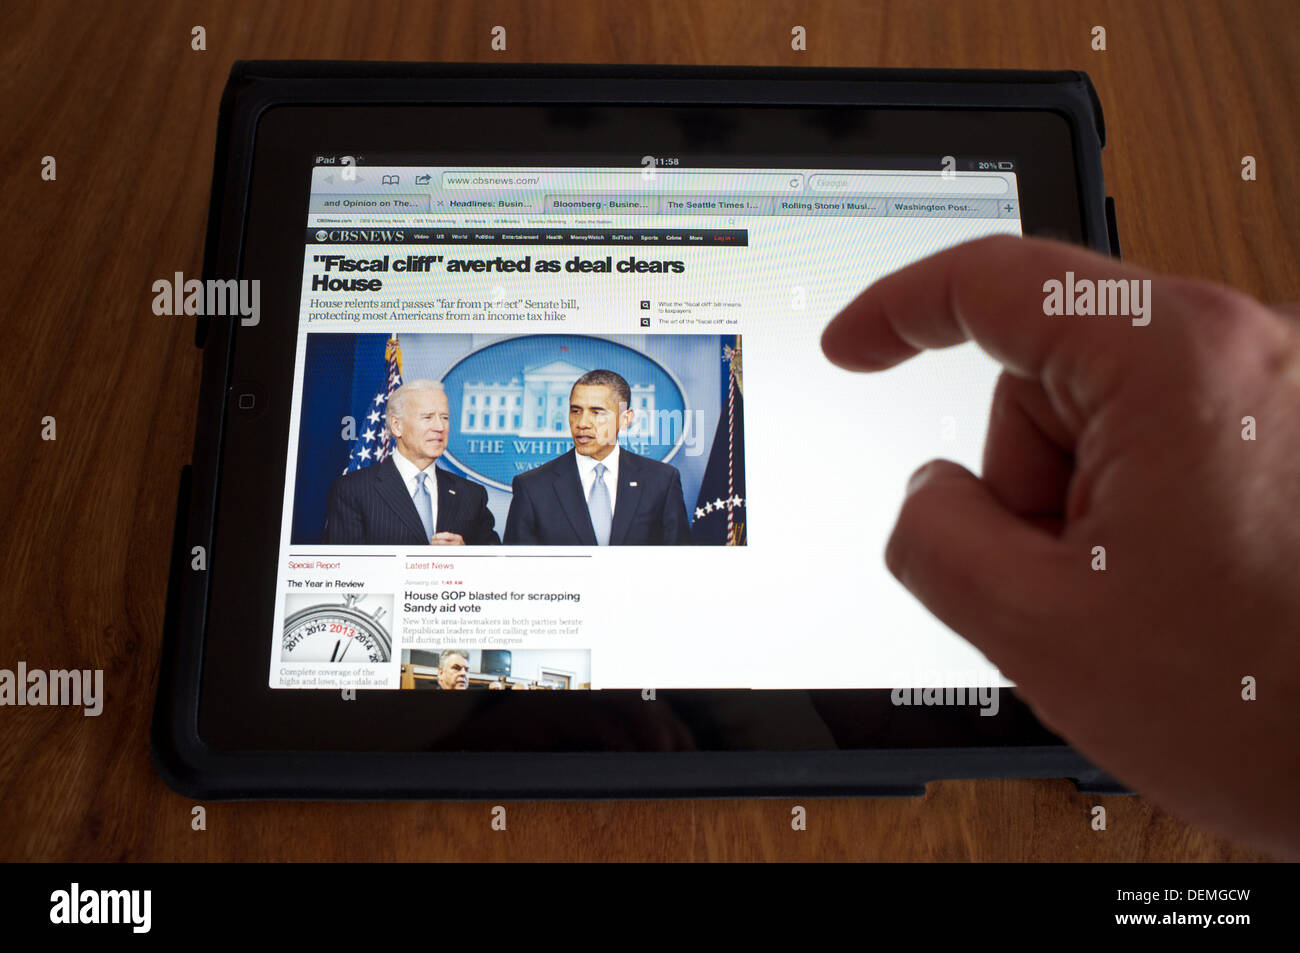 CBS news homepage displayed on an Apple iPad tablet computer Stock Photo